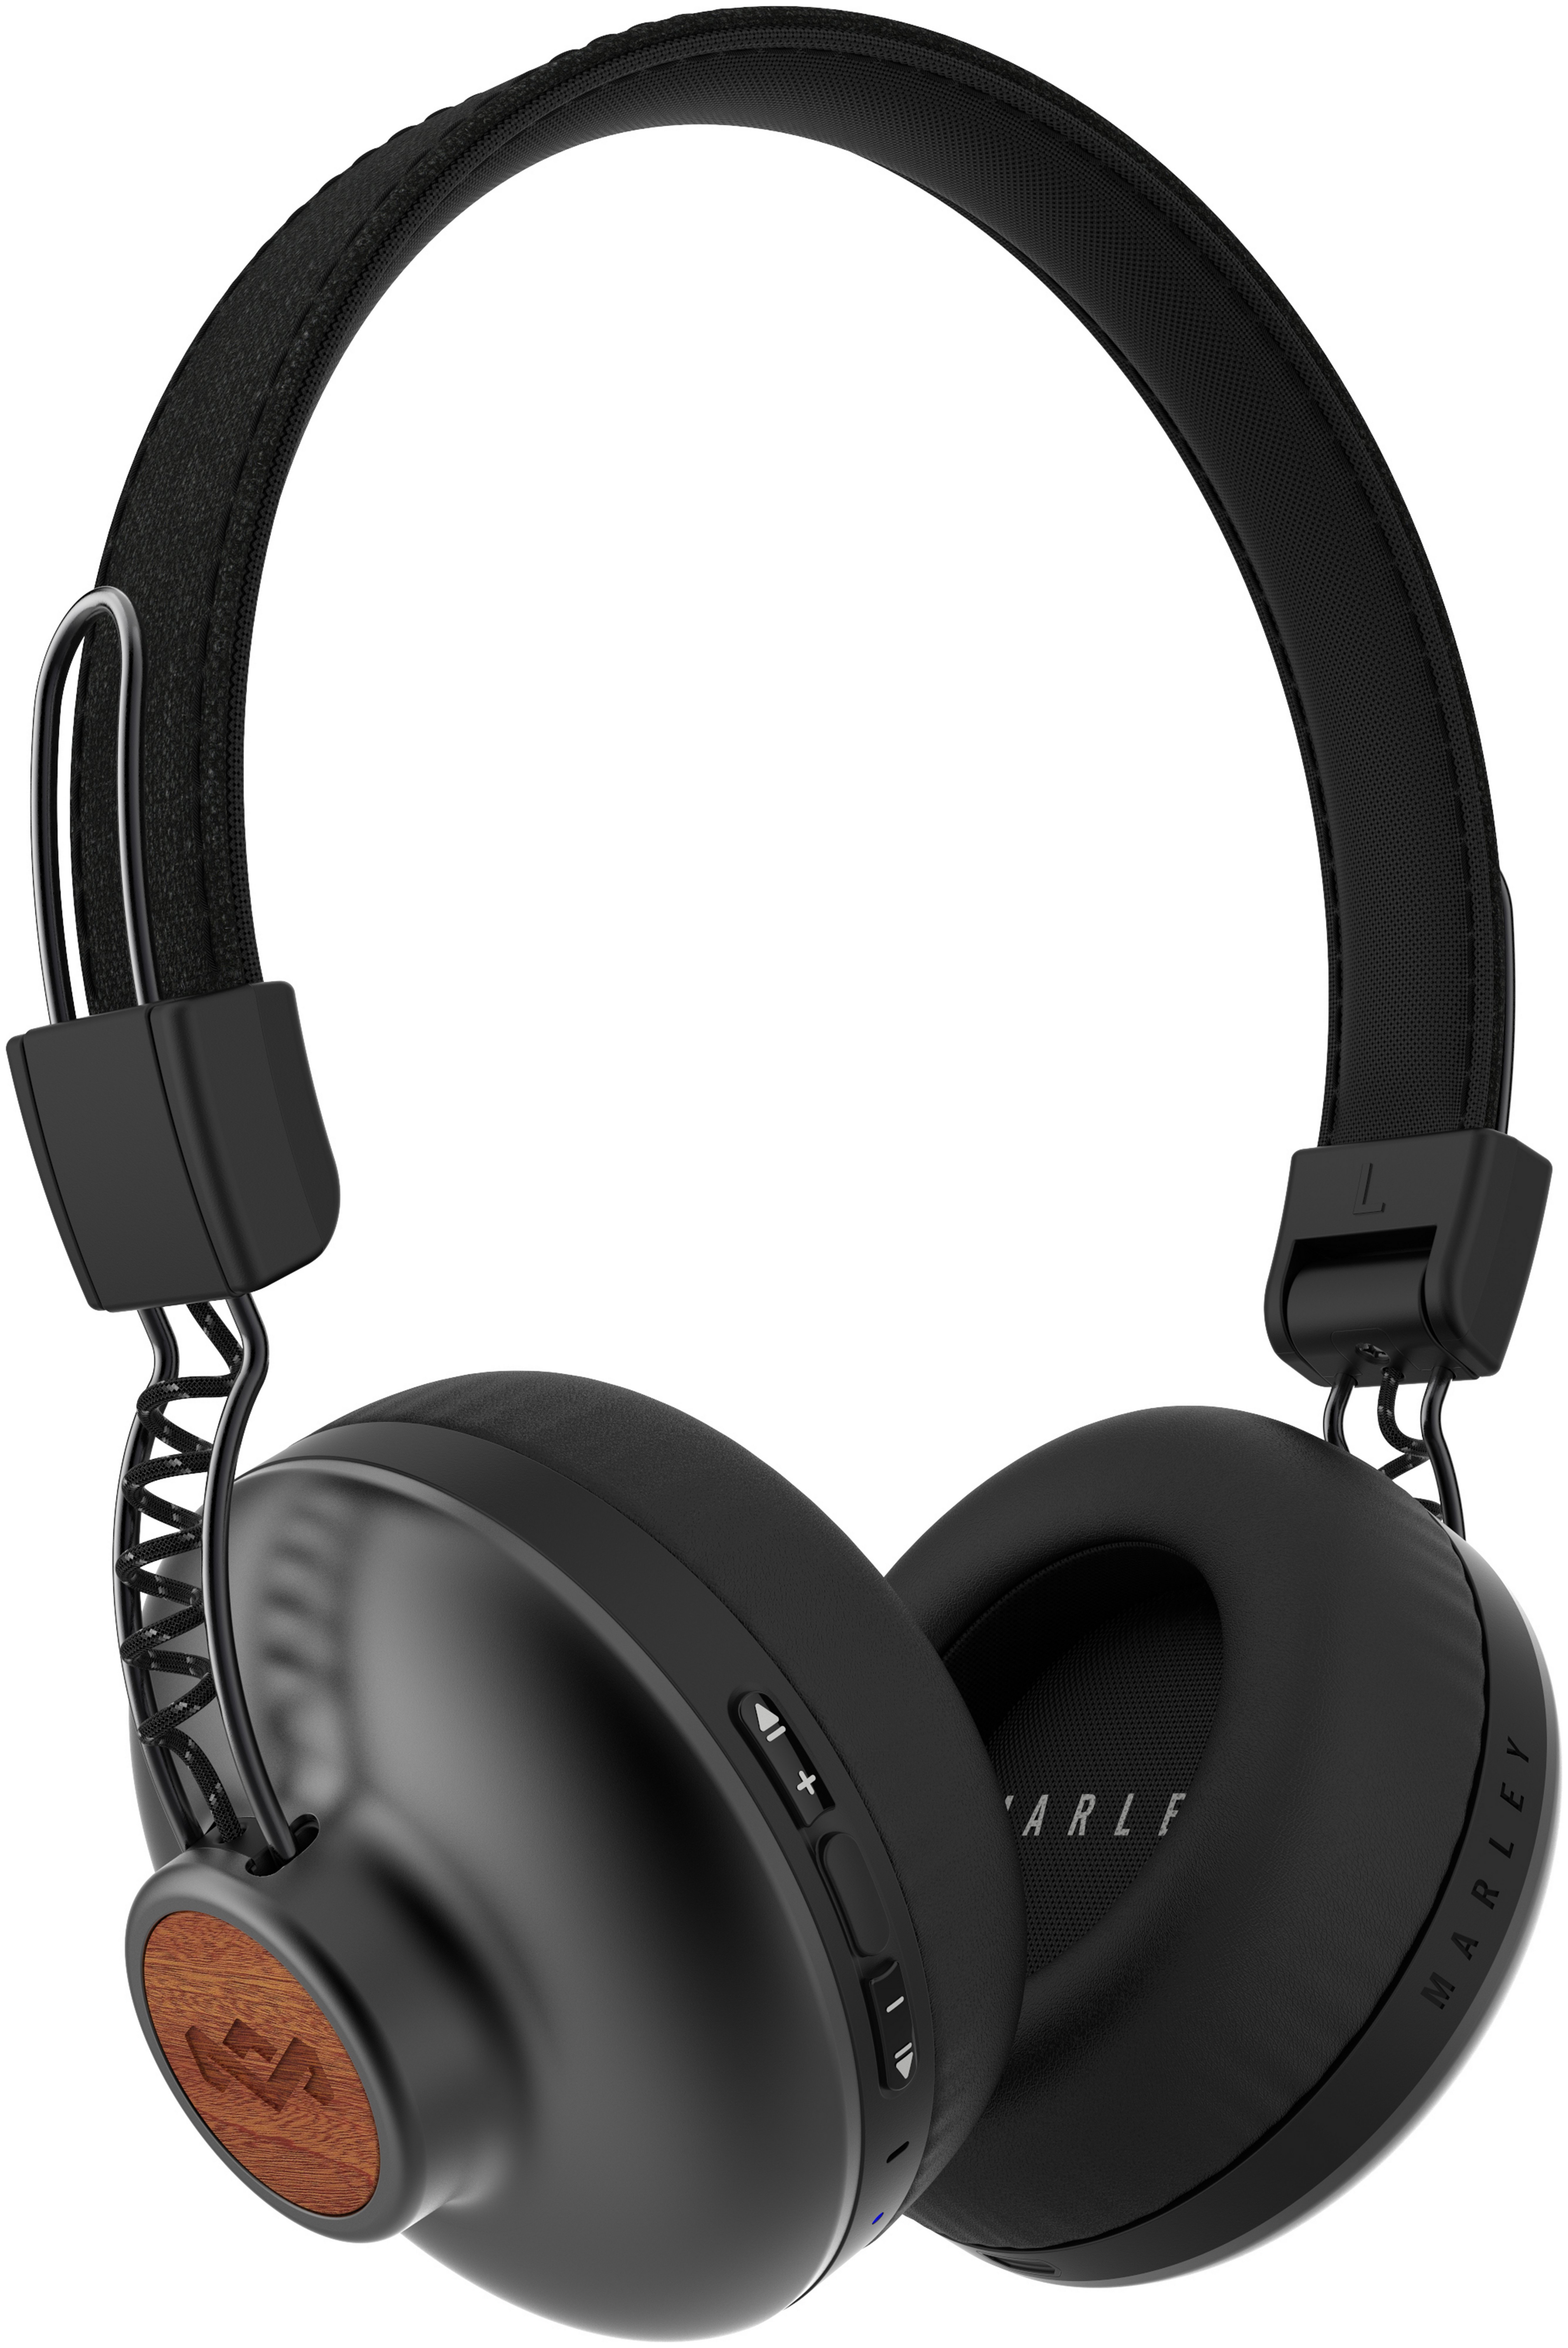 Marley Positive Vibration 2.0 Wireless Headphones - Black